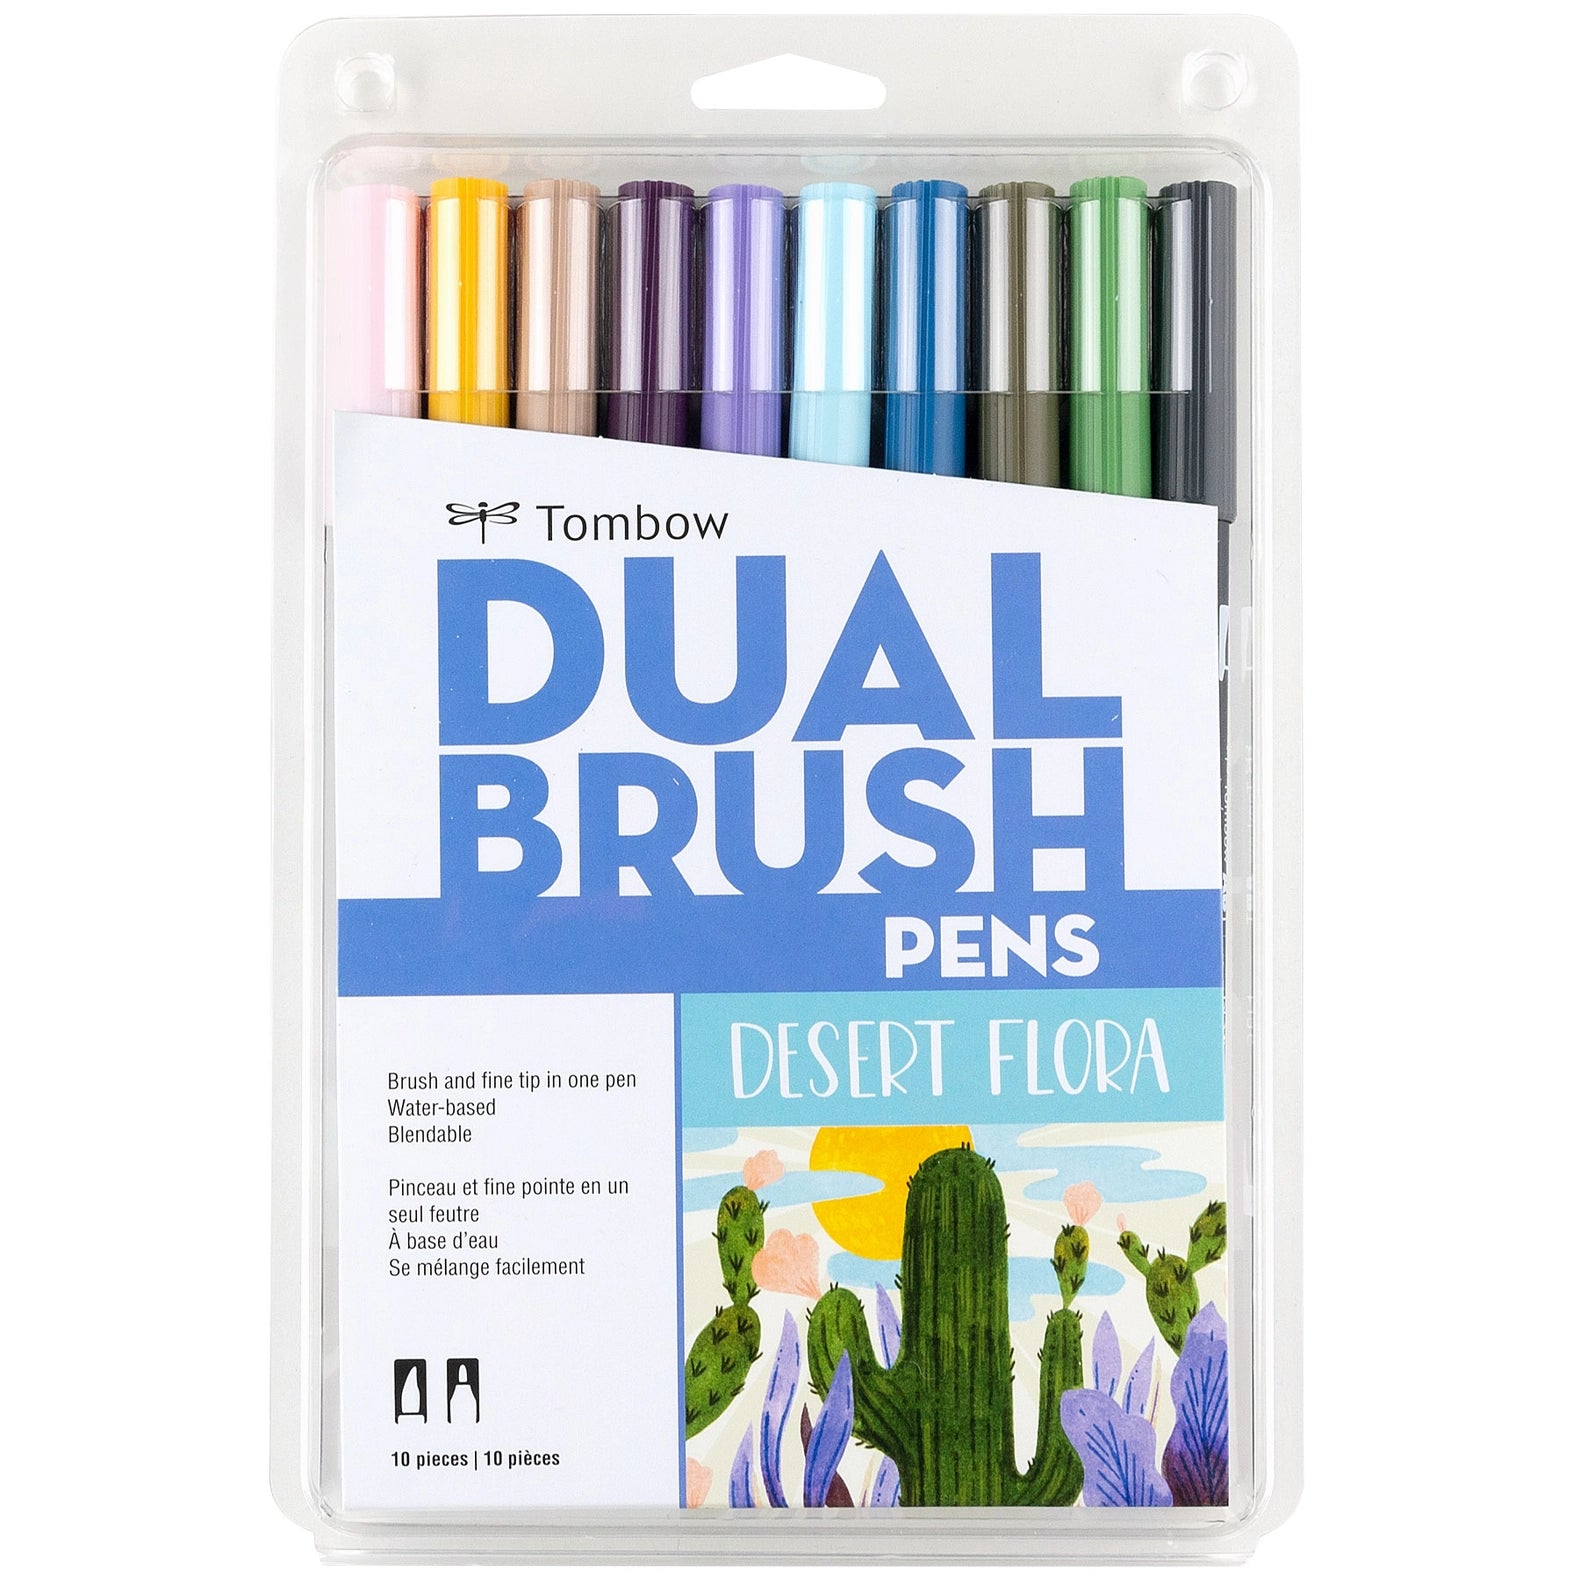 Desert Flora Dual Brush Art Markers - 10 Pk